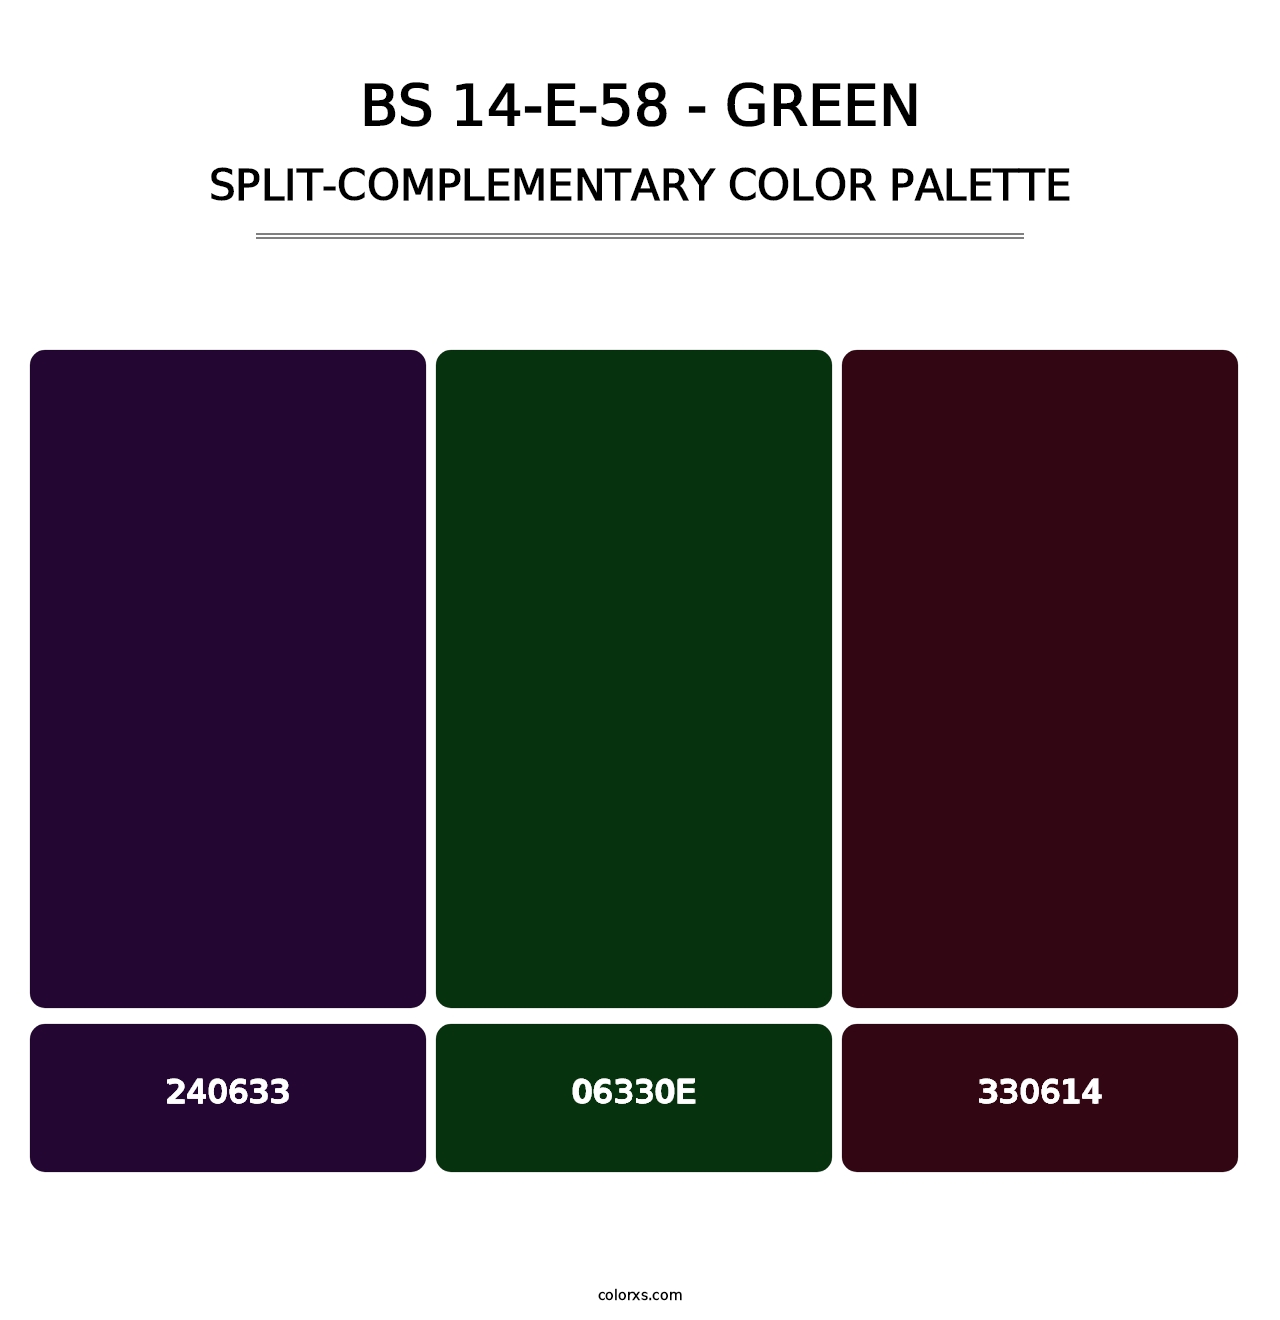 BS 14-E-58 - Green - Split-Complementary Color Palette